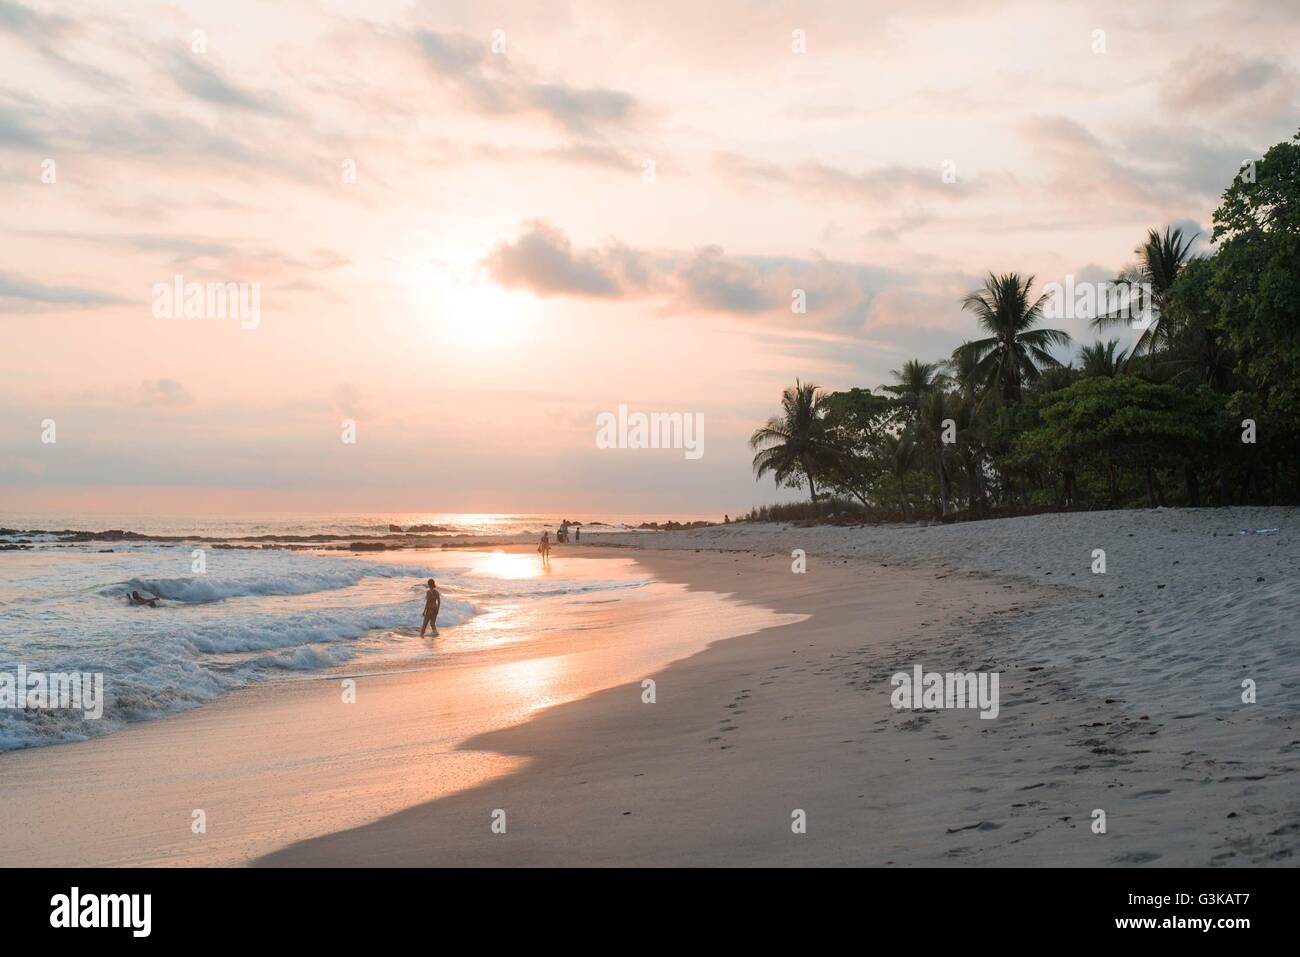 Sunset on the beach in Santa Teresa, Costa Rica Stock Photo